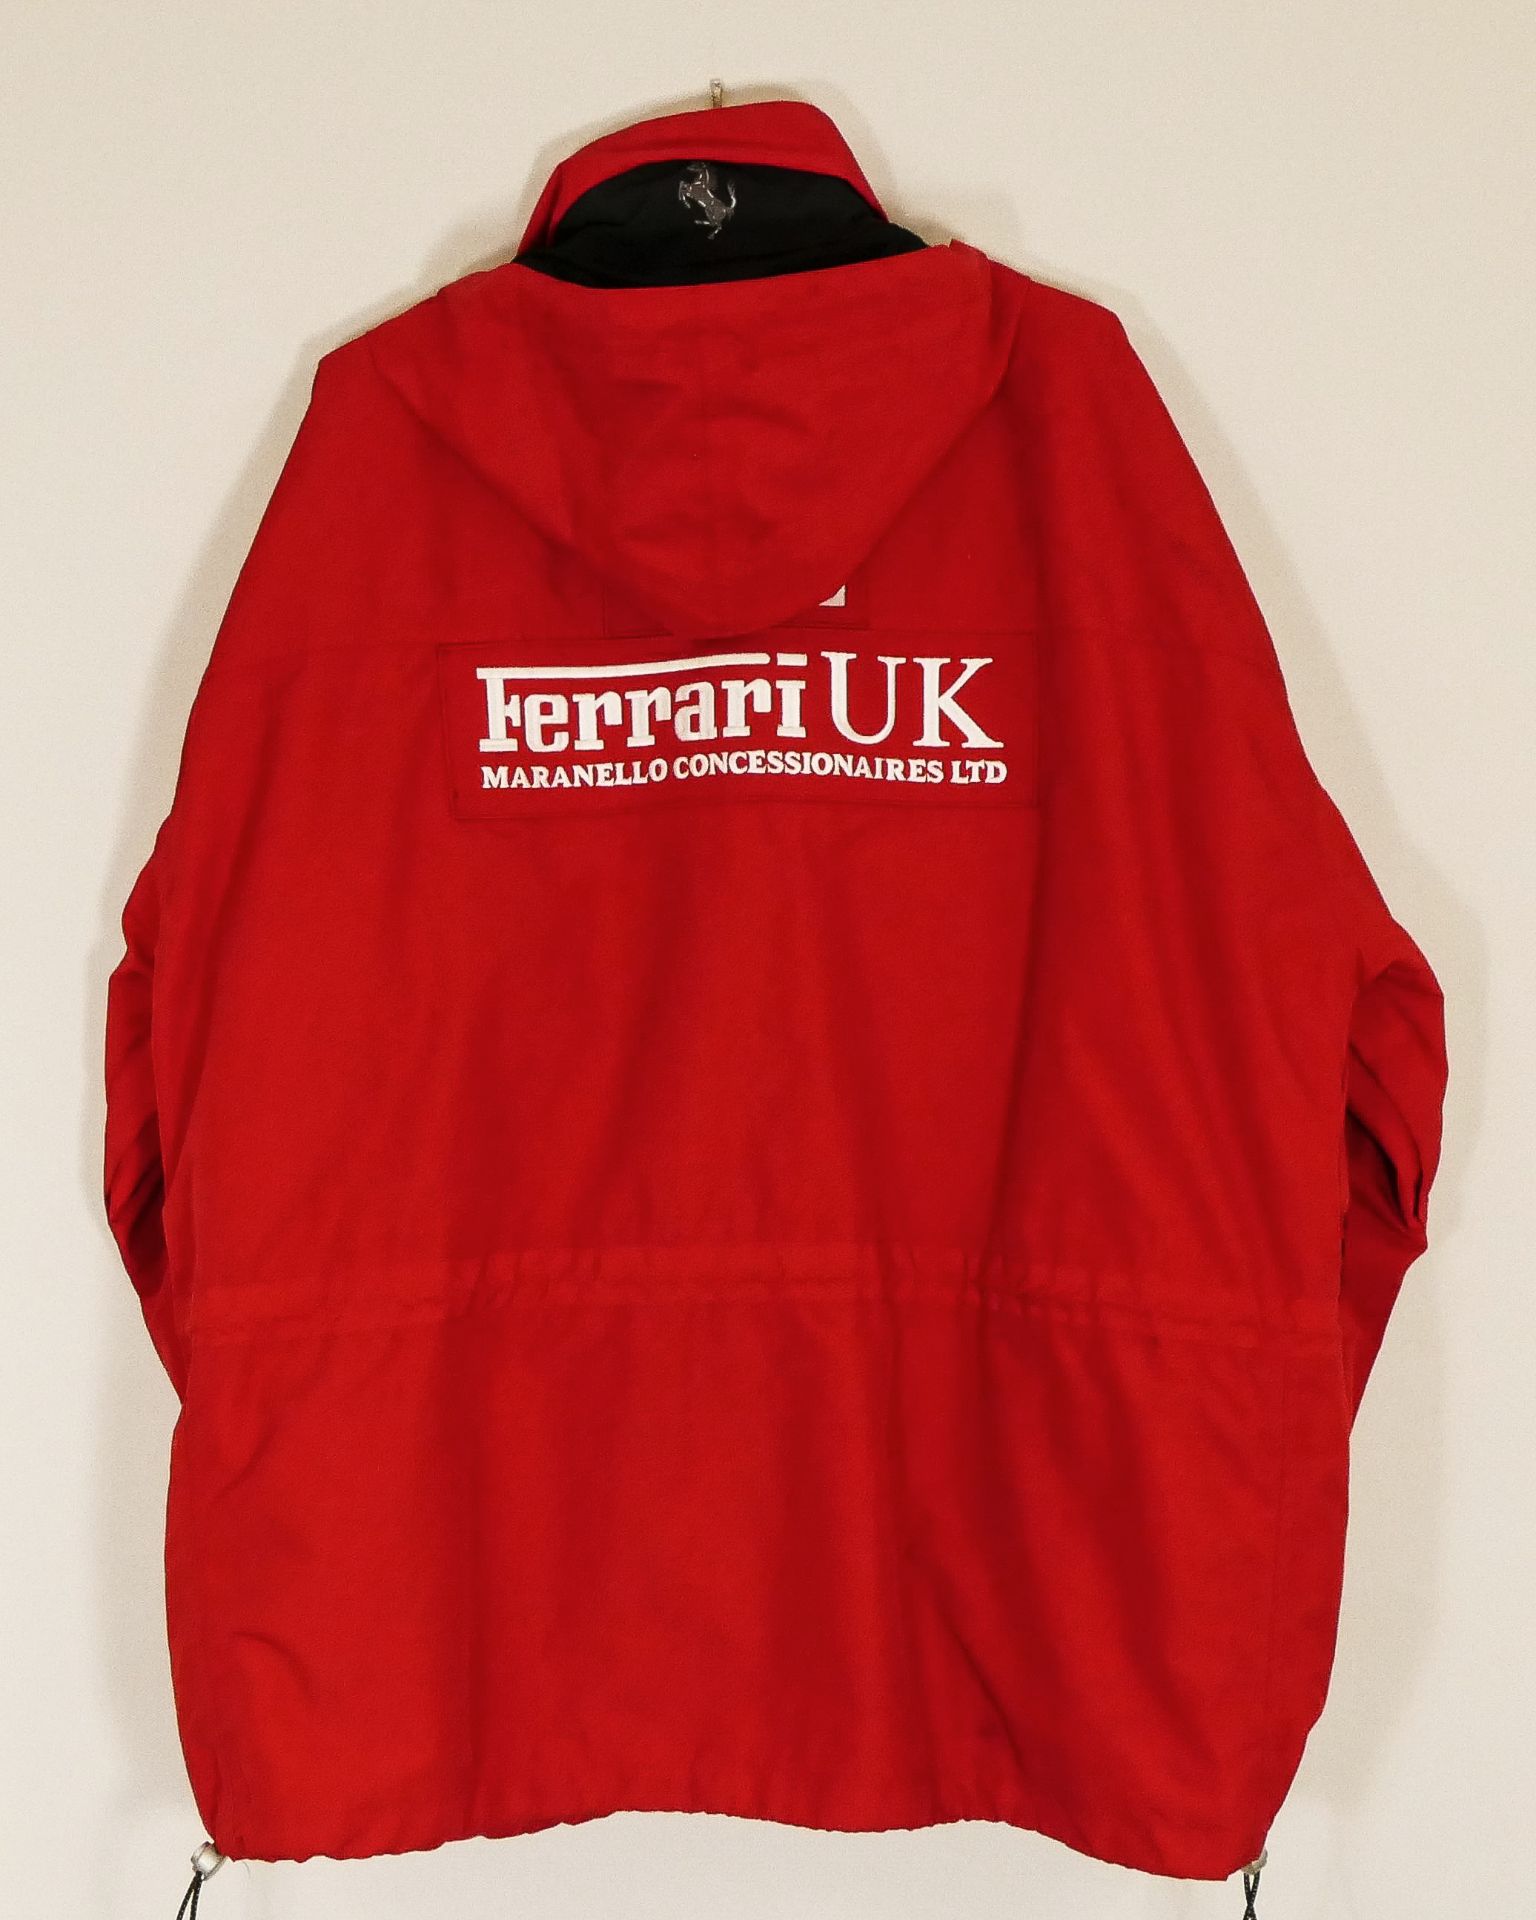 Ferrari Veloqx Motorsport/Team Maranello Concessionaires team jacket, size XL, as worn during the - Image 6 of 11